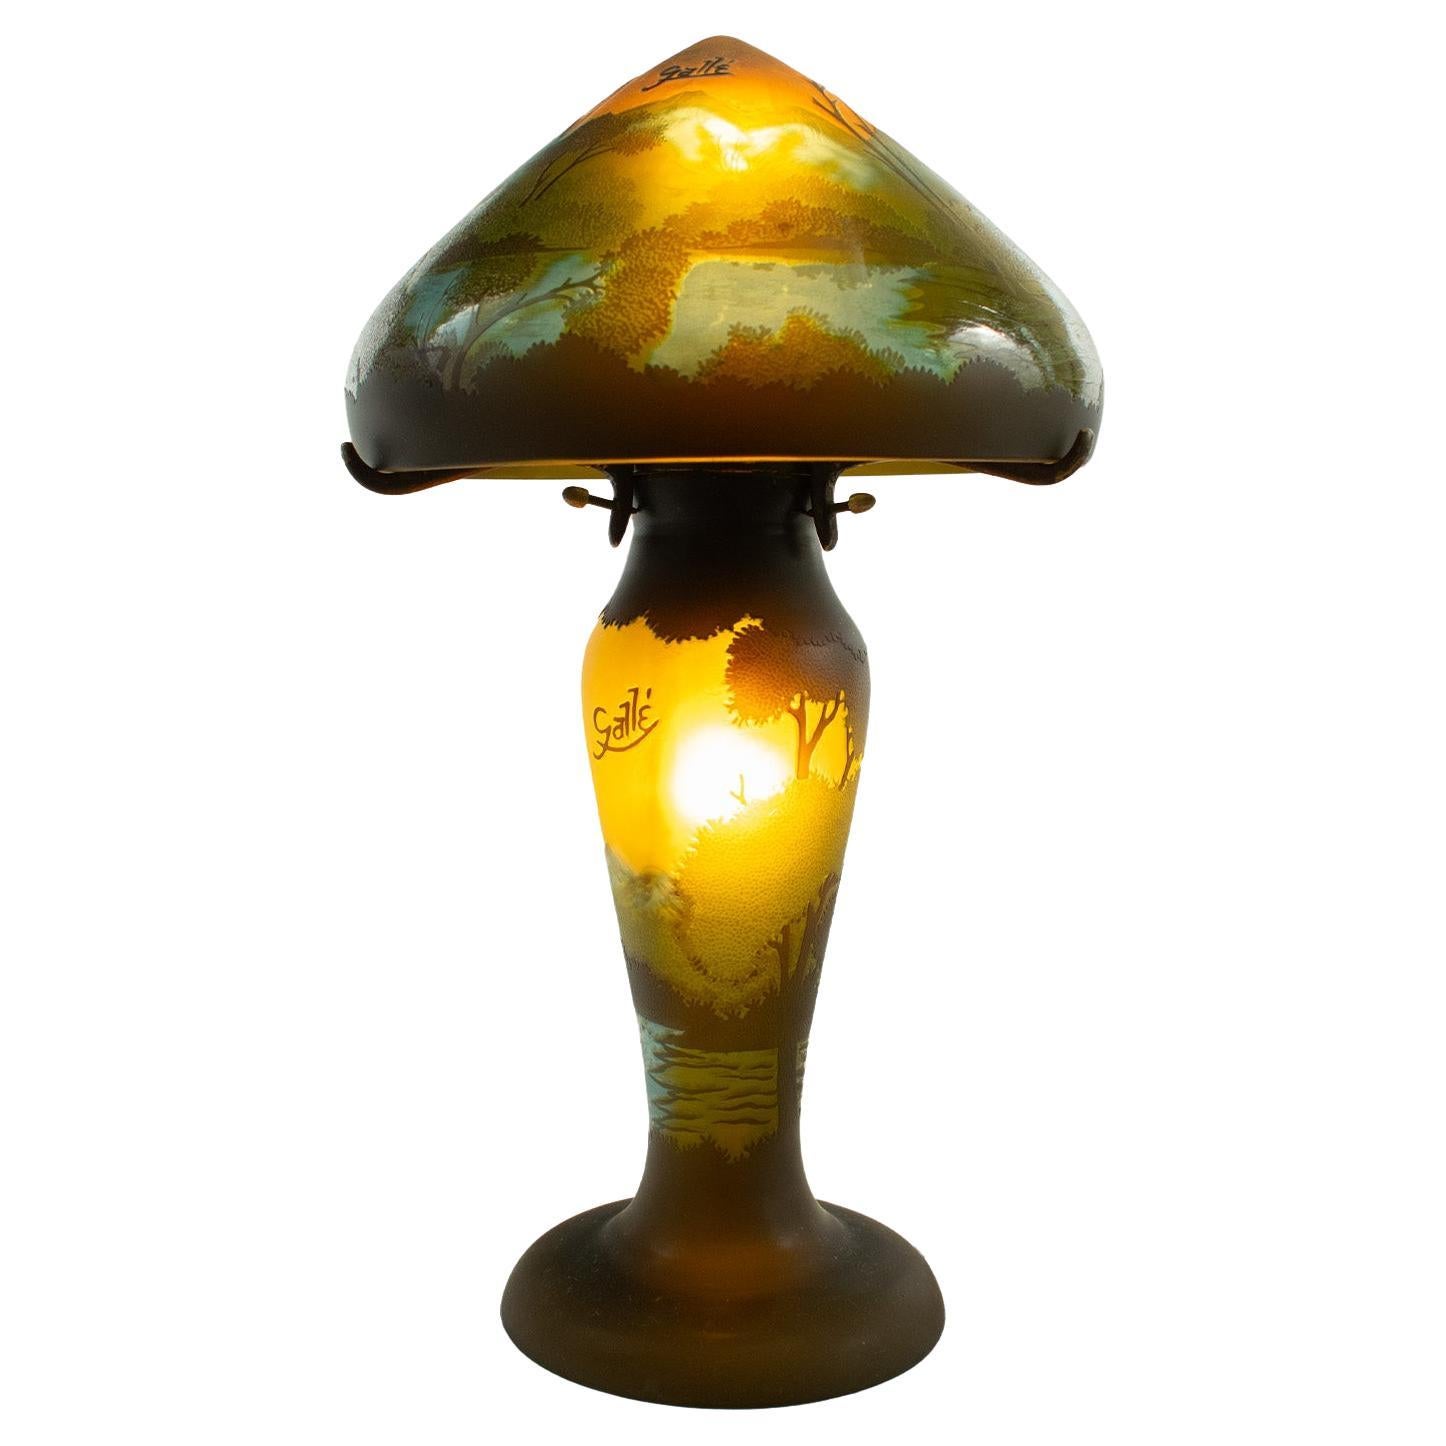 GALLE Art Nouveau Mushroom lamp in multilayer glass